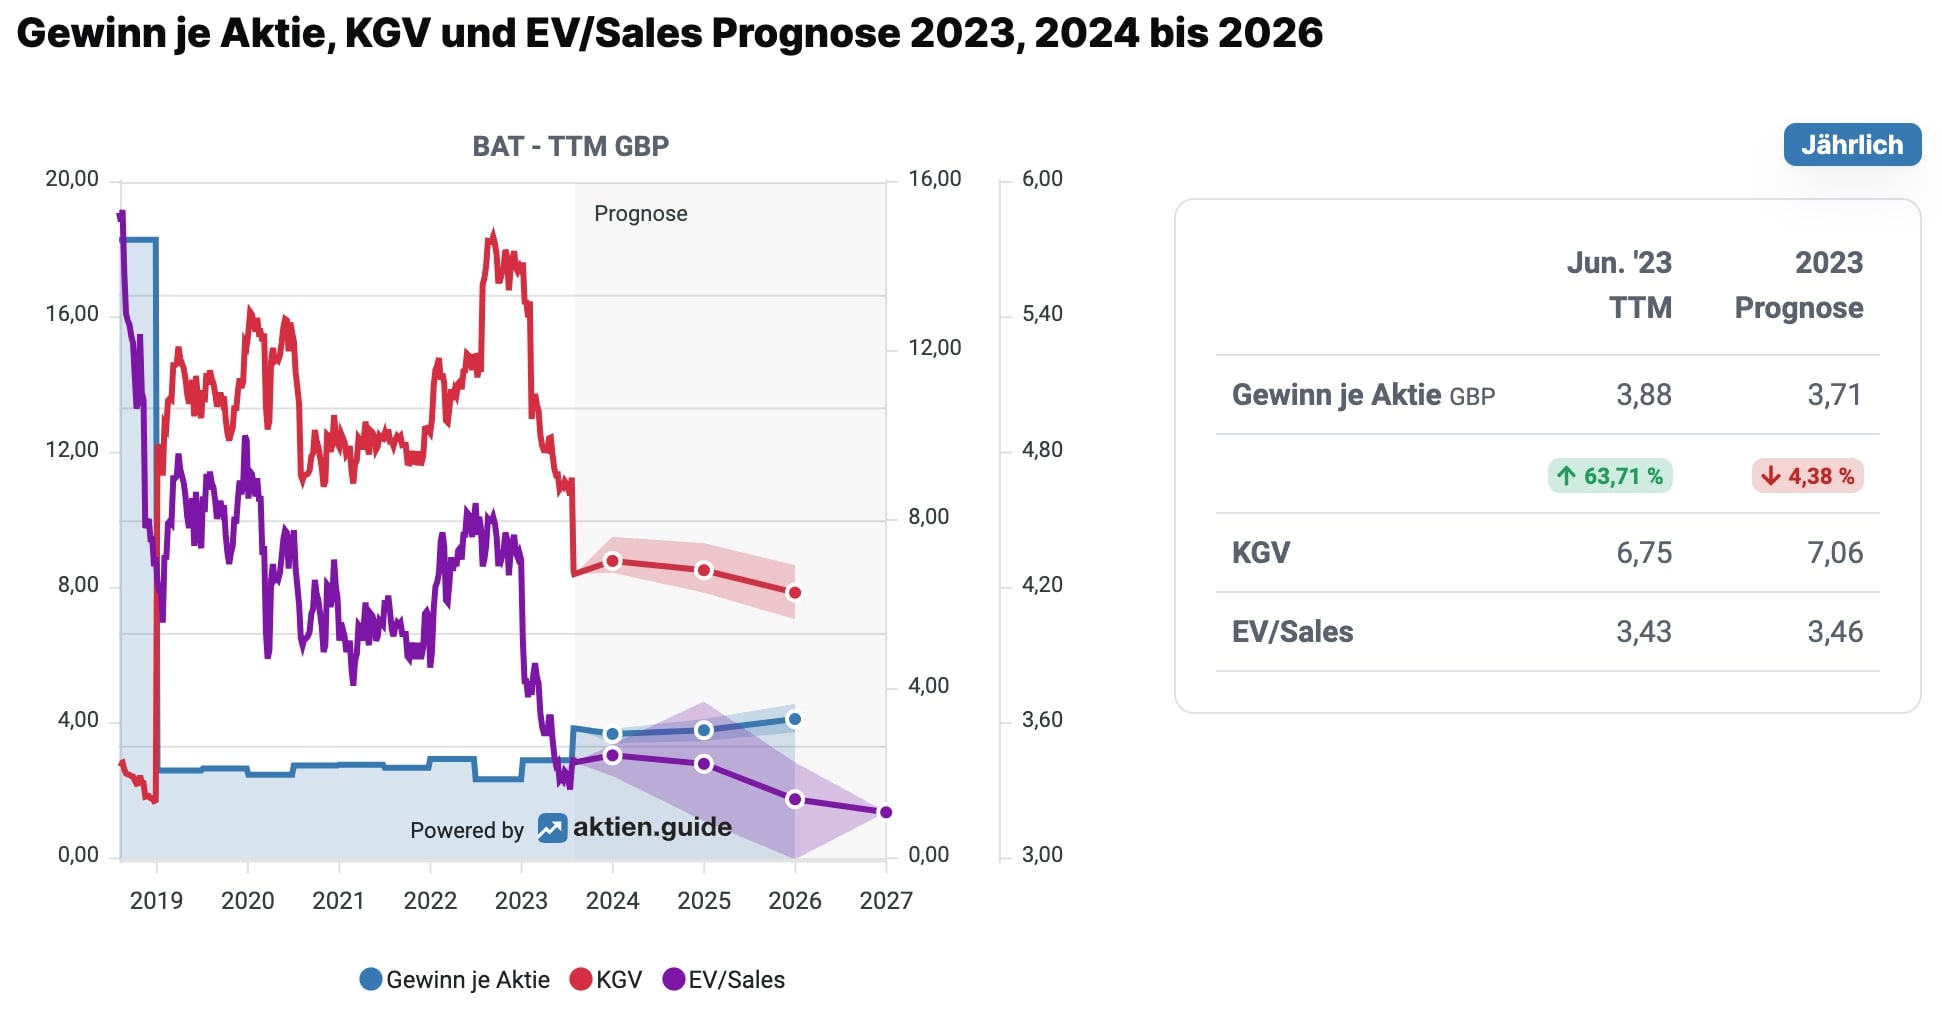 BAT Gewinn je Aktie KGV und EV/Sales Prognose